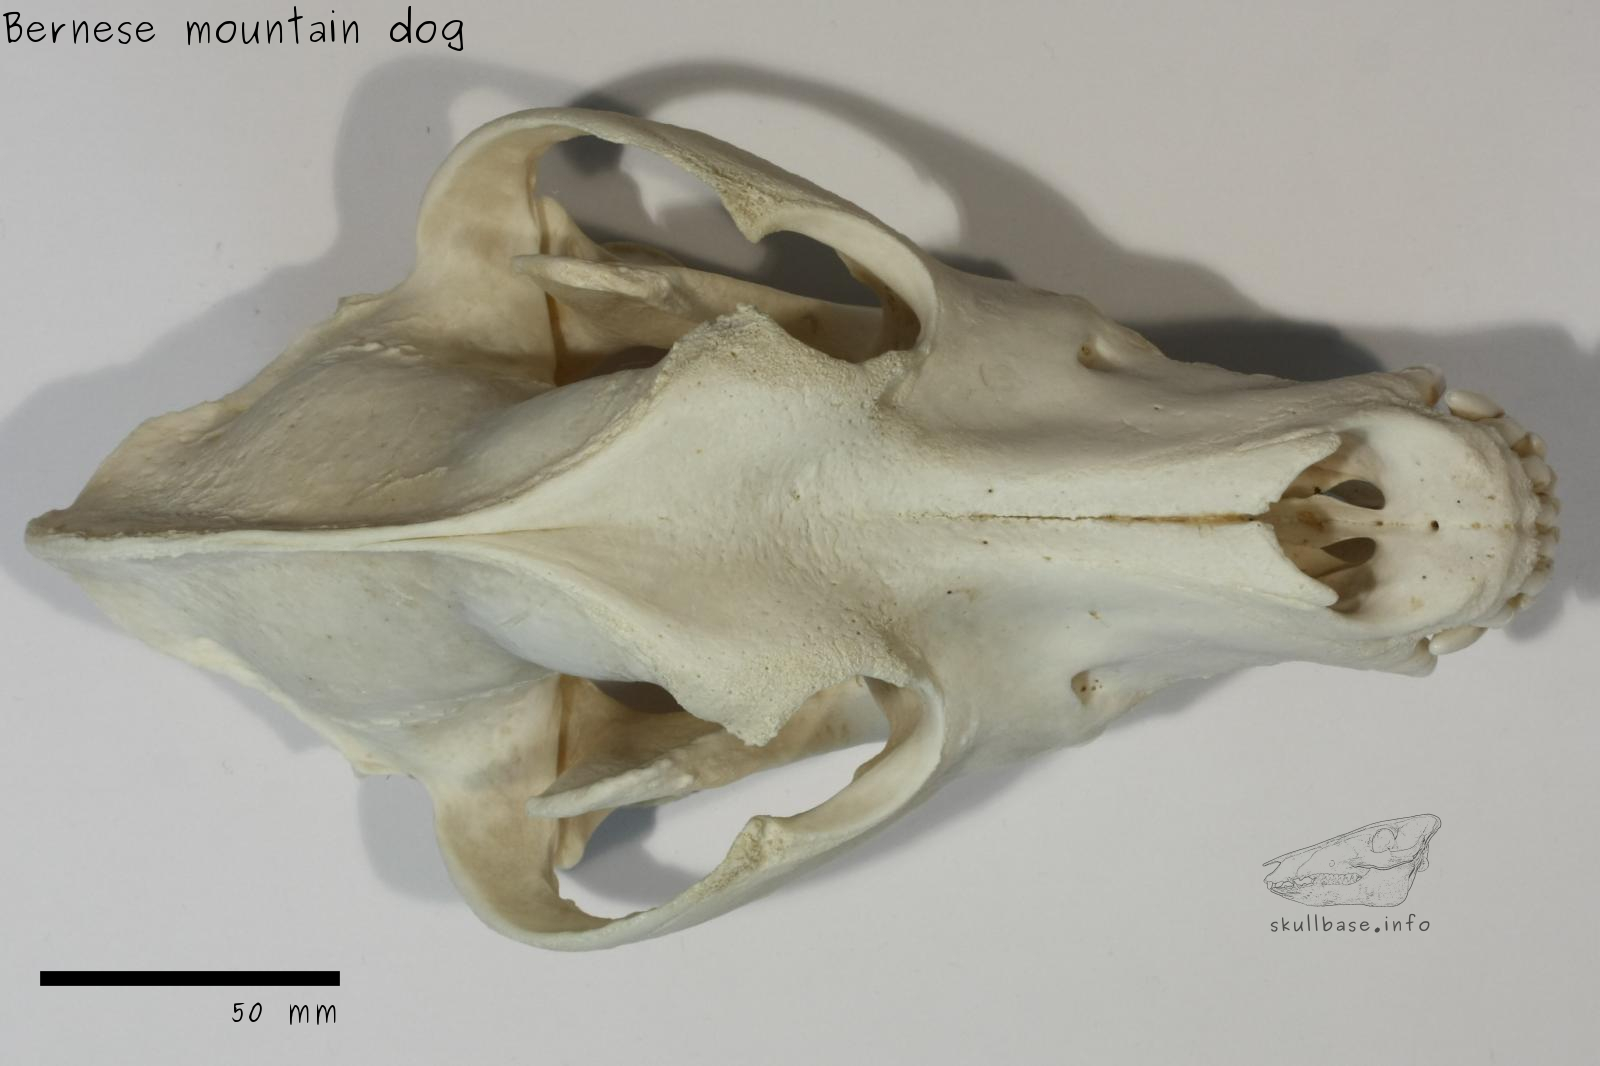 Bernese mountain dog (Canis lupus familiaris) skull dorsal view